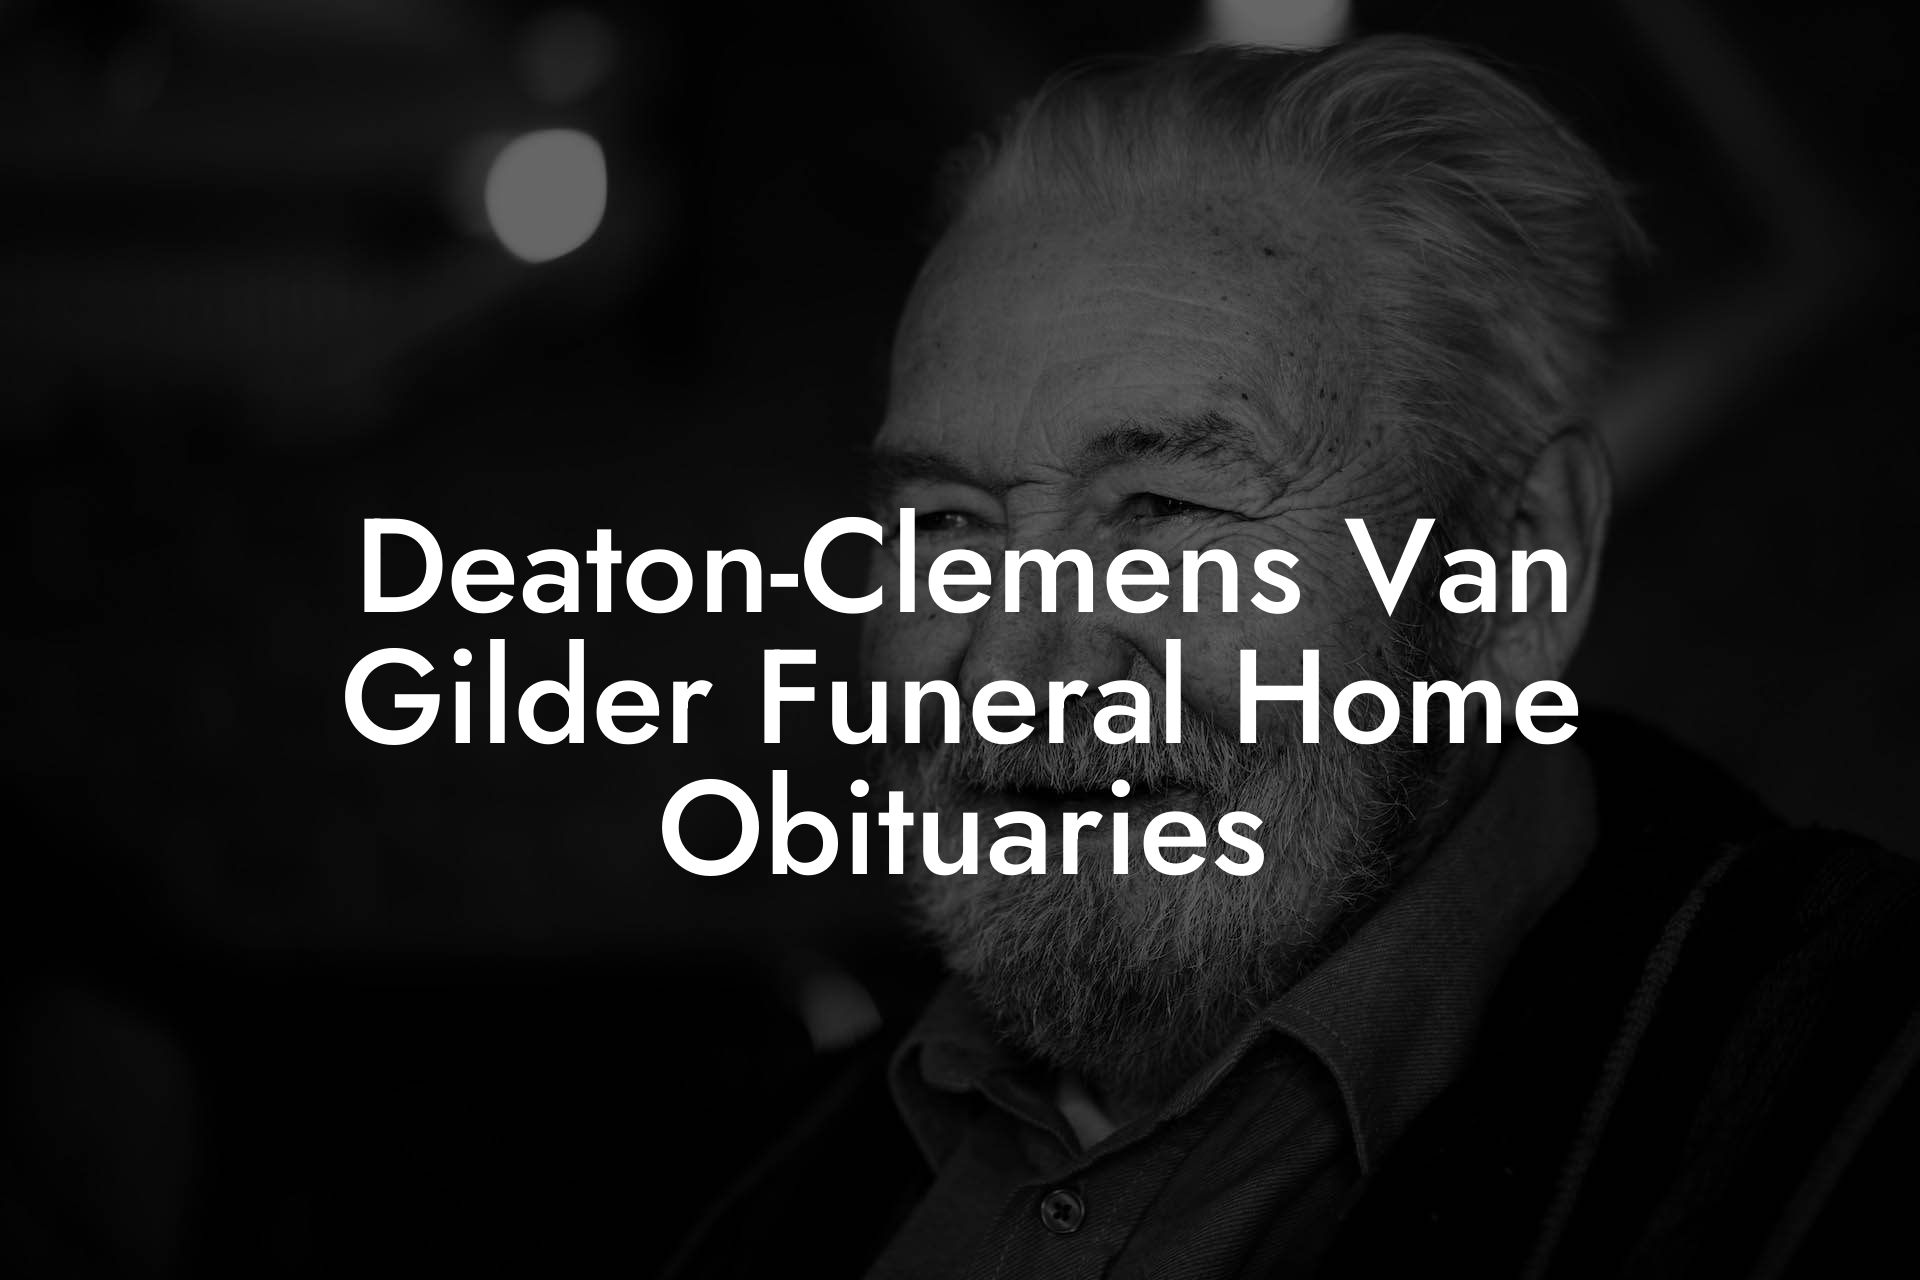 Deaton-Clemens Van Gilder Funeral Home Obituaries